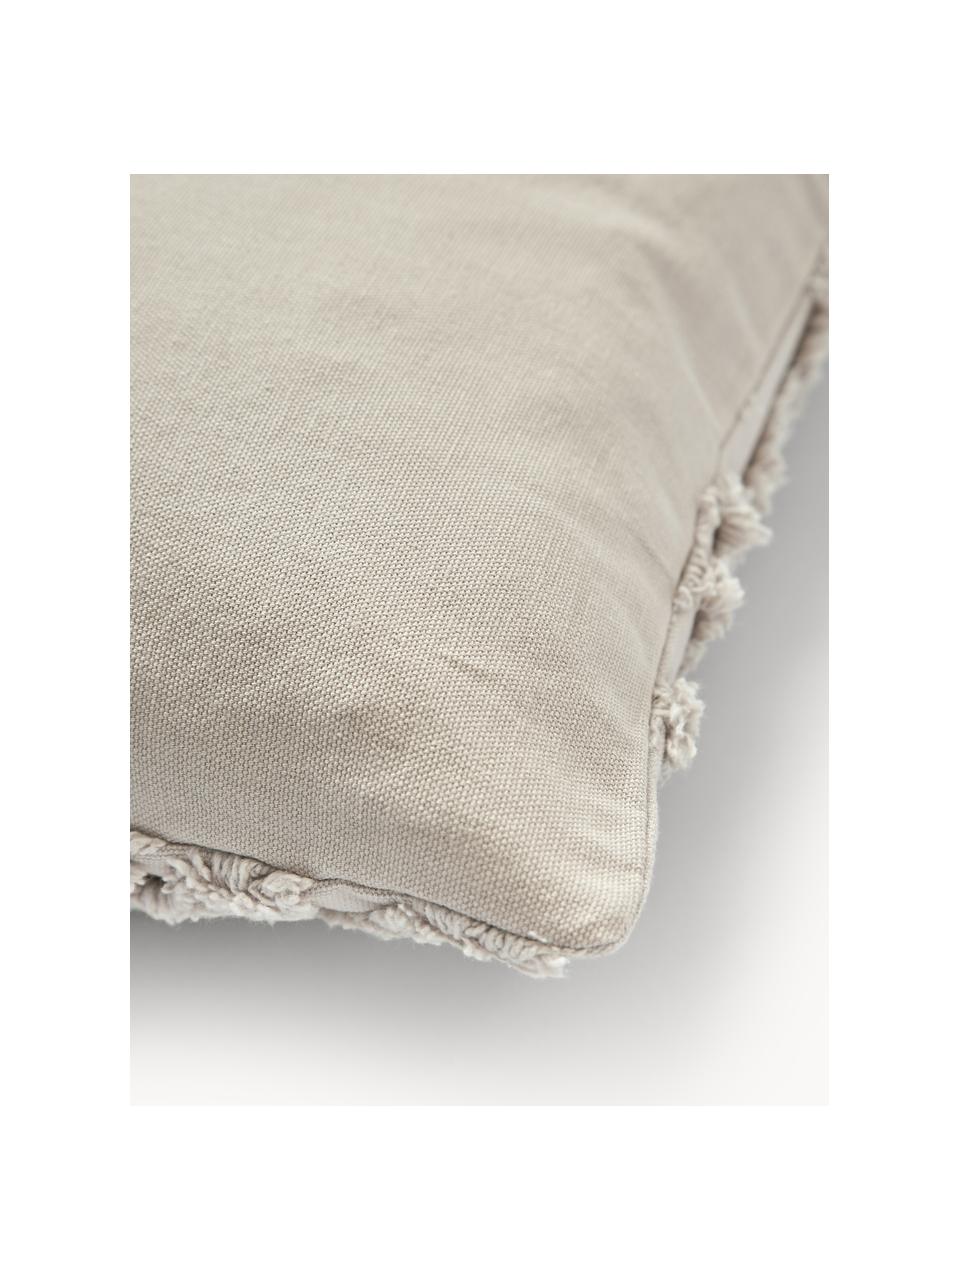 Baumwollperkal-Kissenhülle Faith mit getufteter Verzierung, 100% Baumwolle, Hellbeige, B 40 x L 60 cm